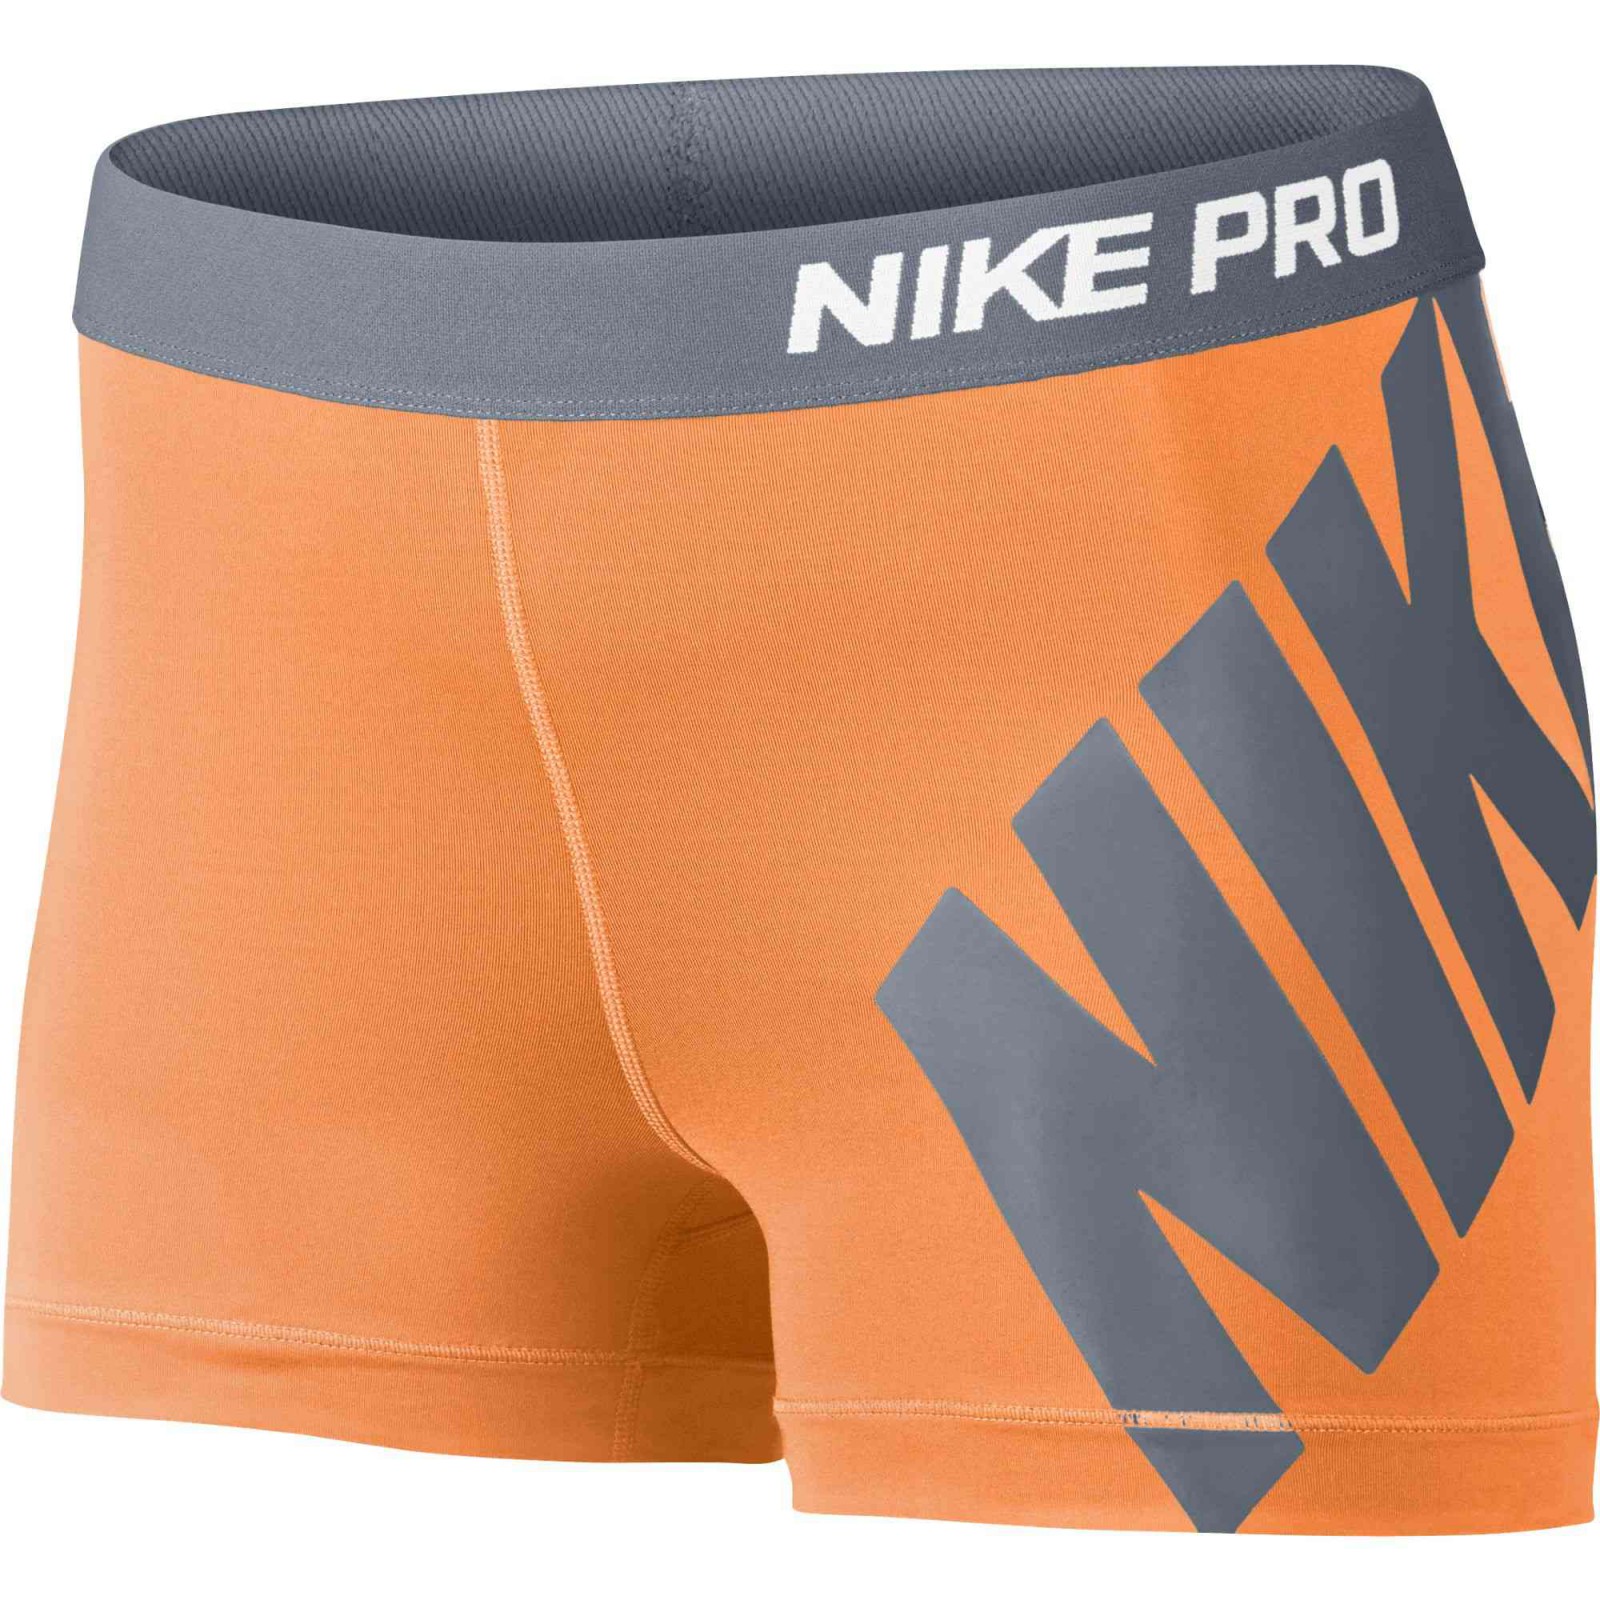 Nike Pro 3. Nike Pro logo. Шорты Nike Orange. Nike Pro шорты. Шорты найк про